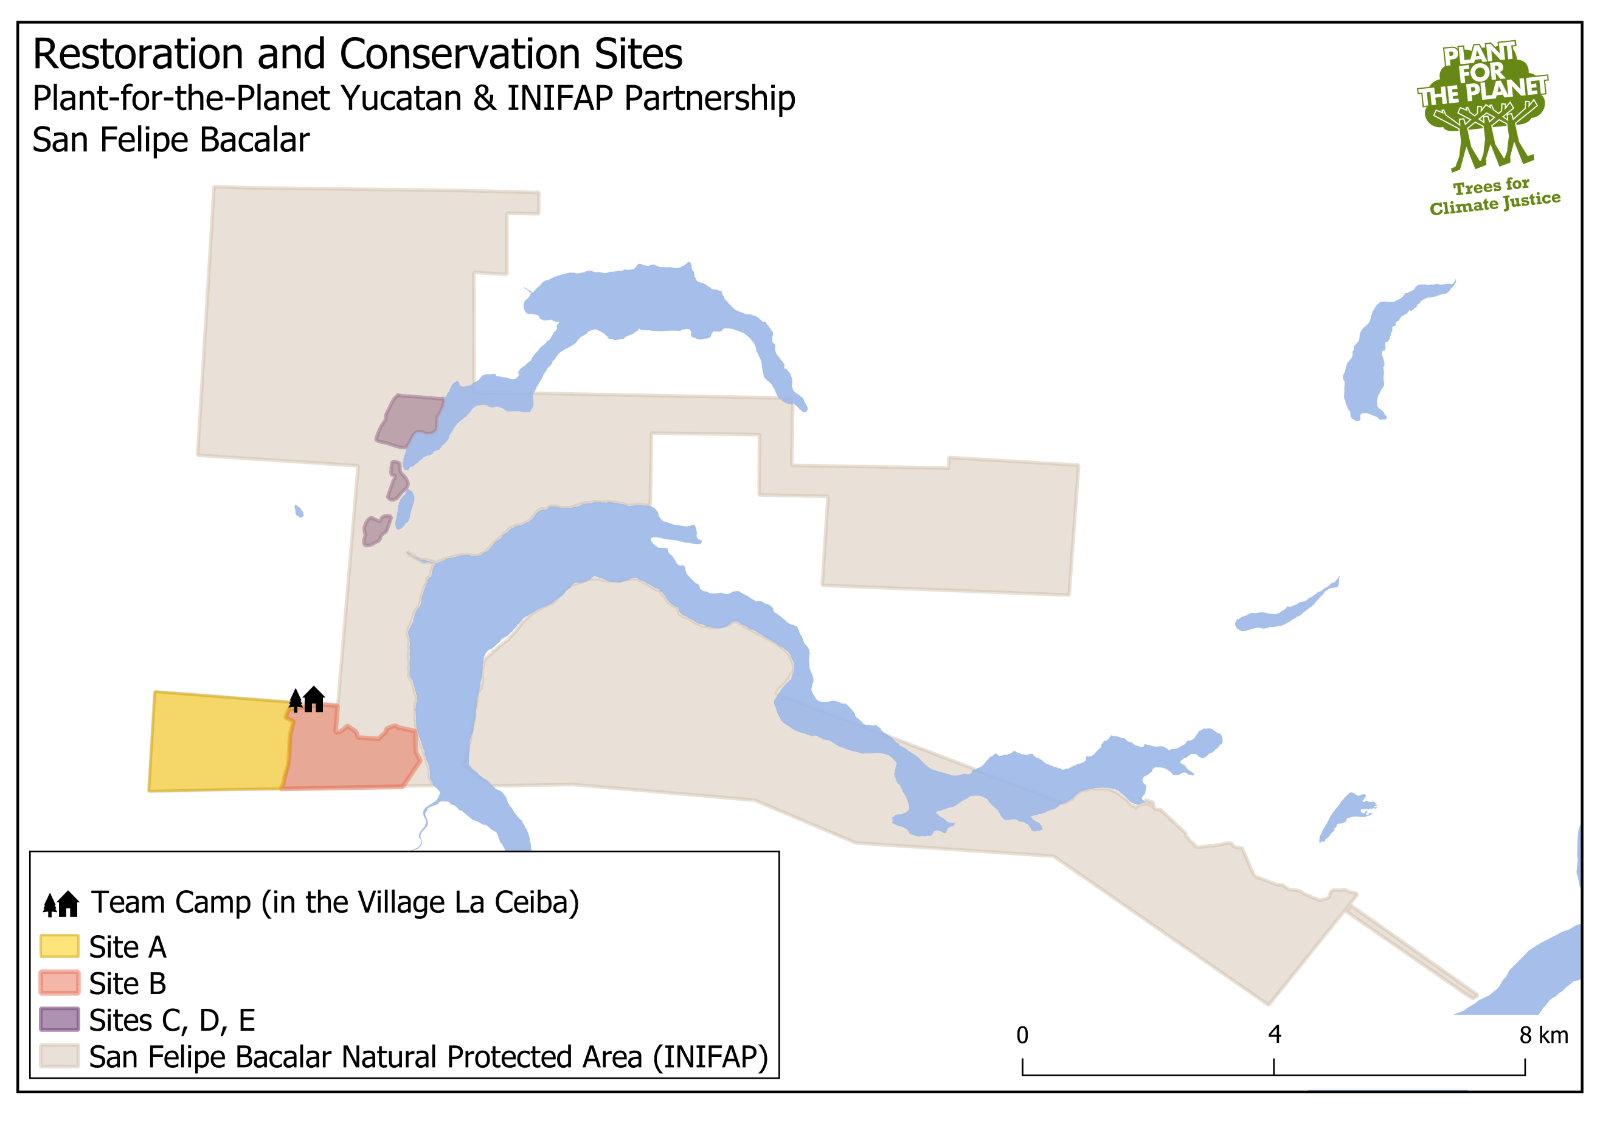 Yucatan Restoration and Conversation Sites